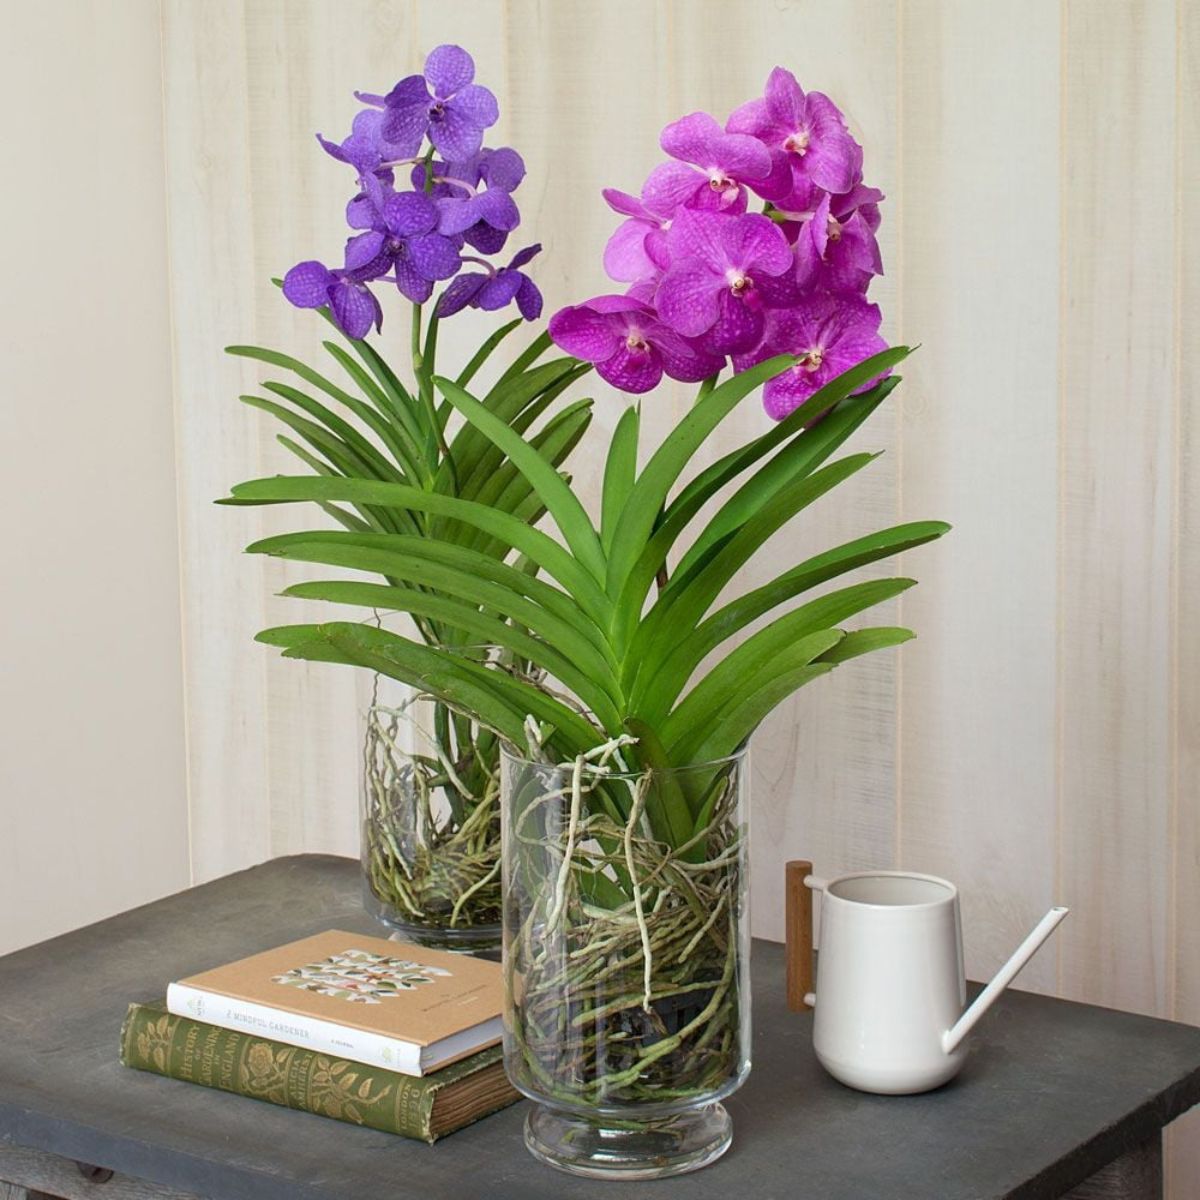 orquídeas vanda em vasos de vidro